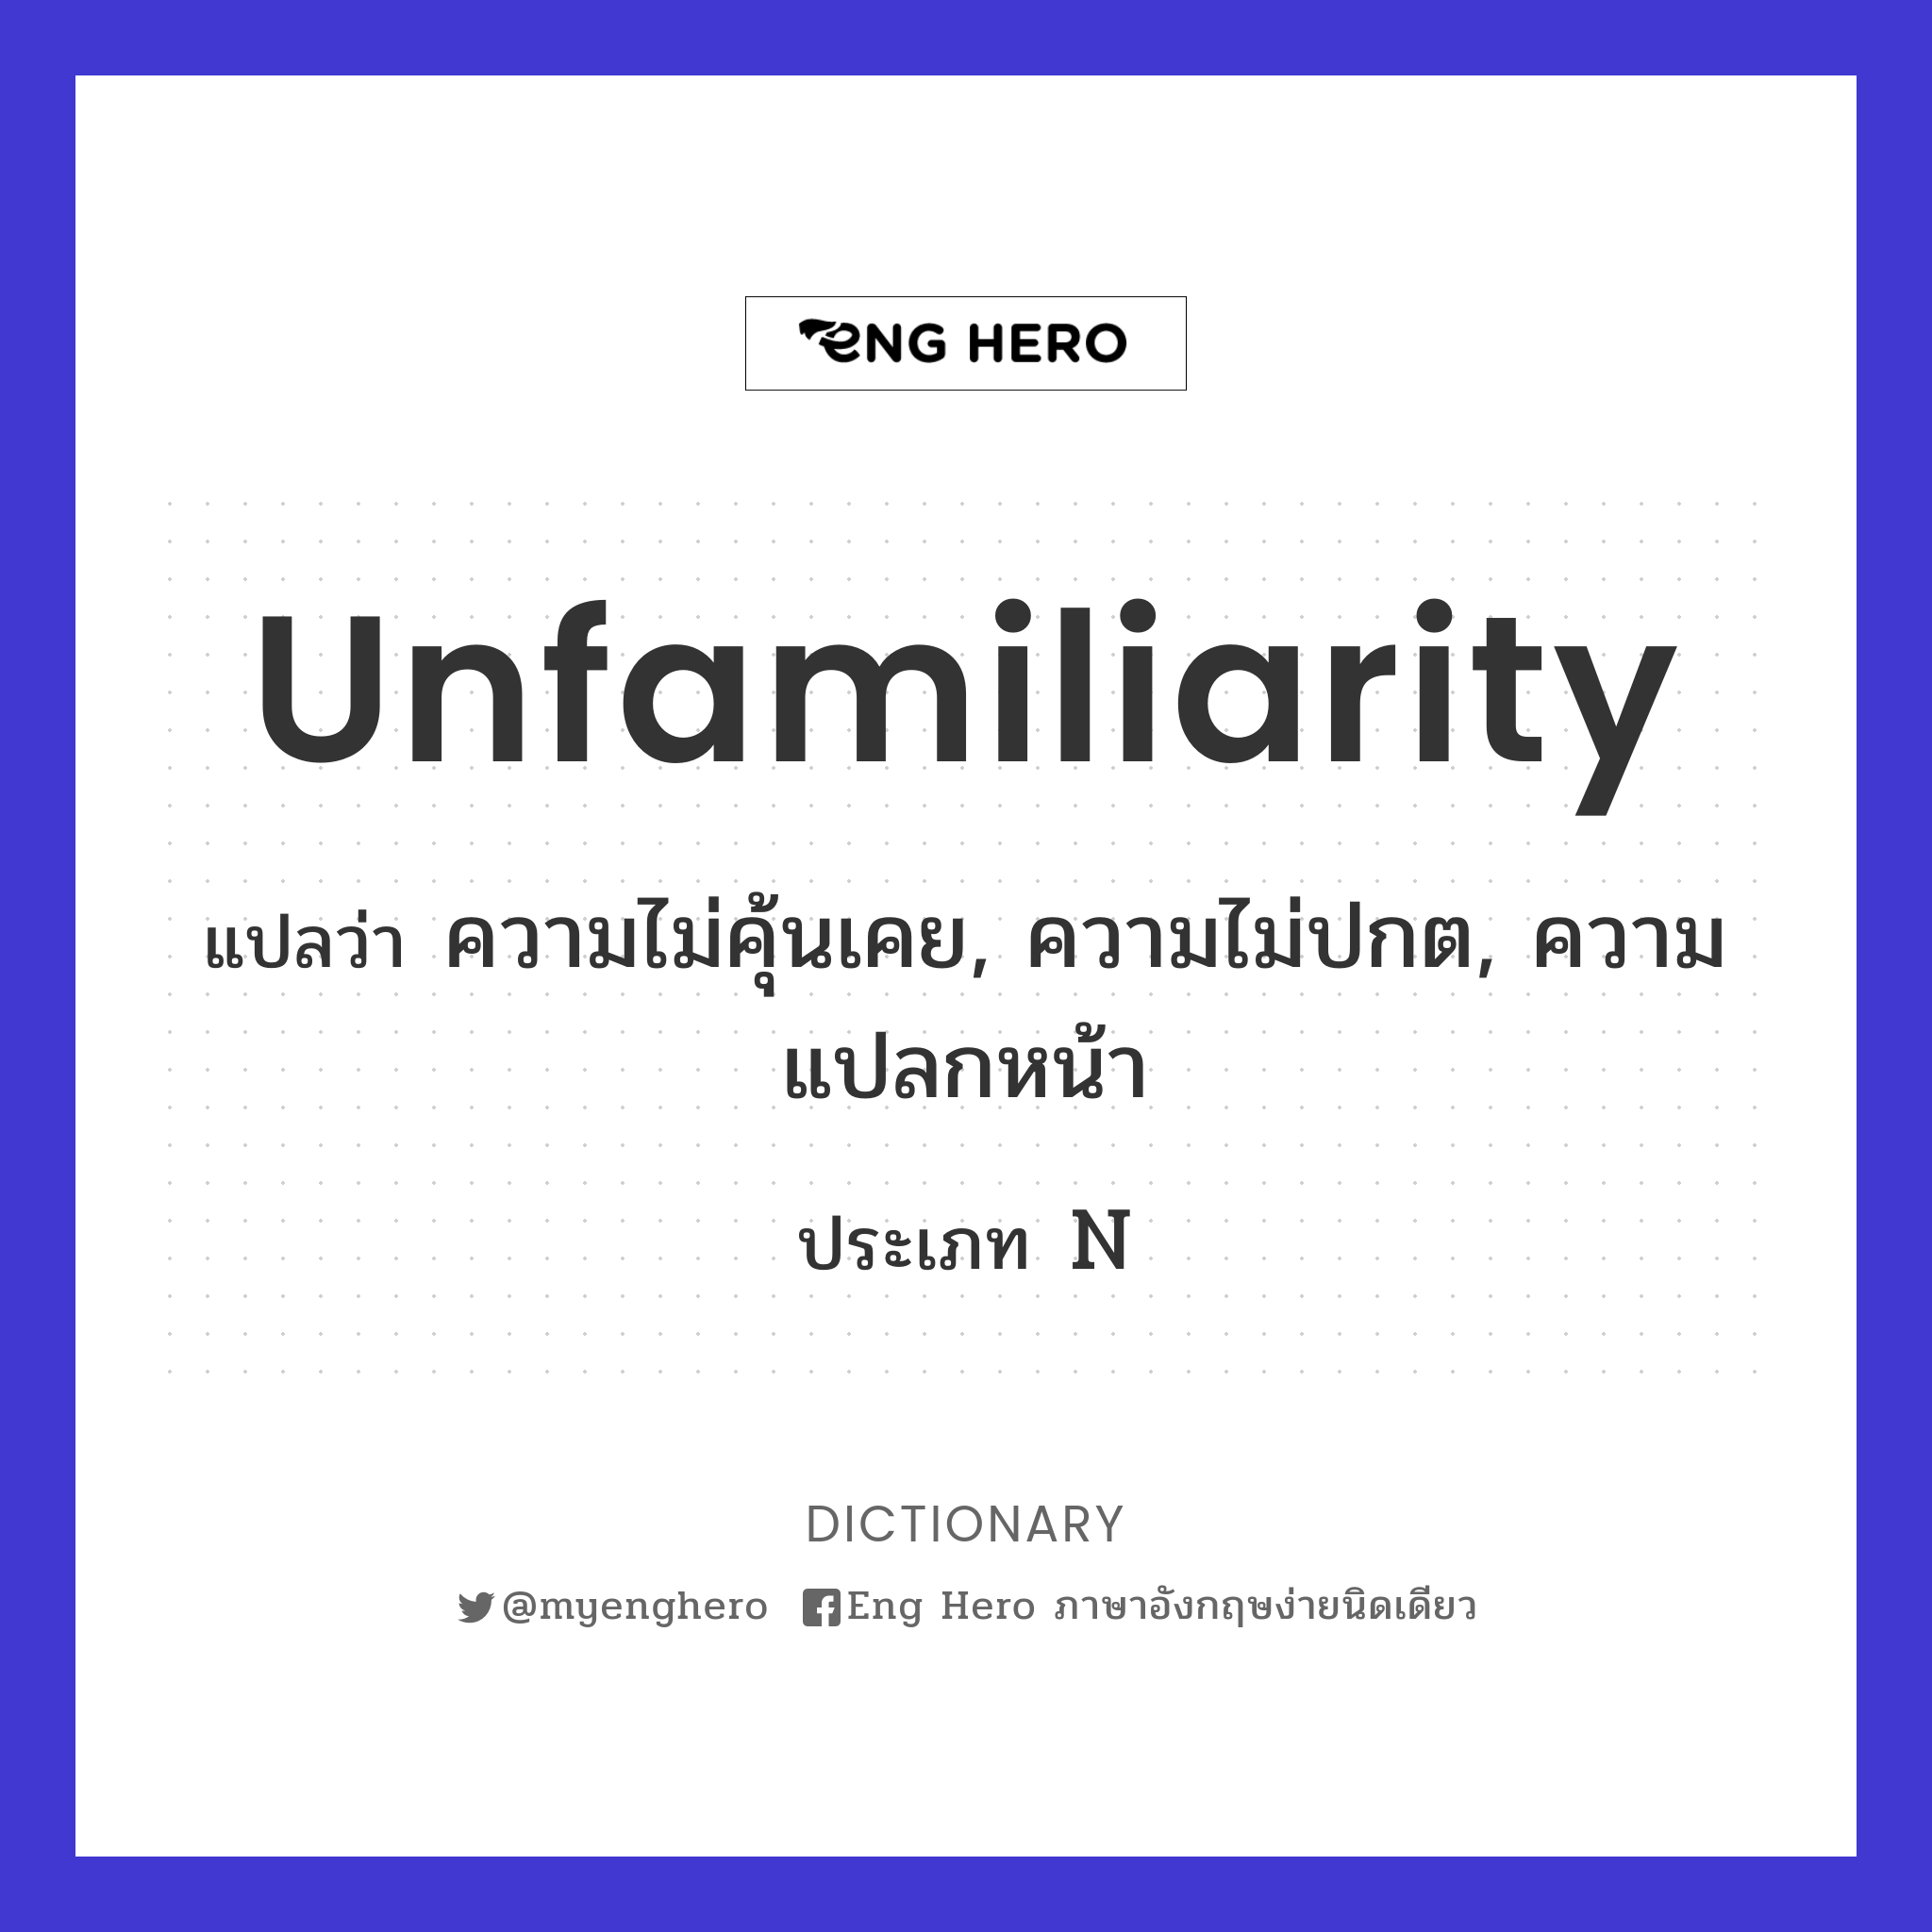 unfamiliarity